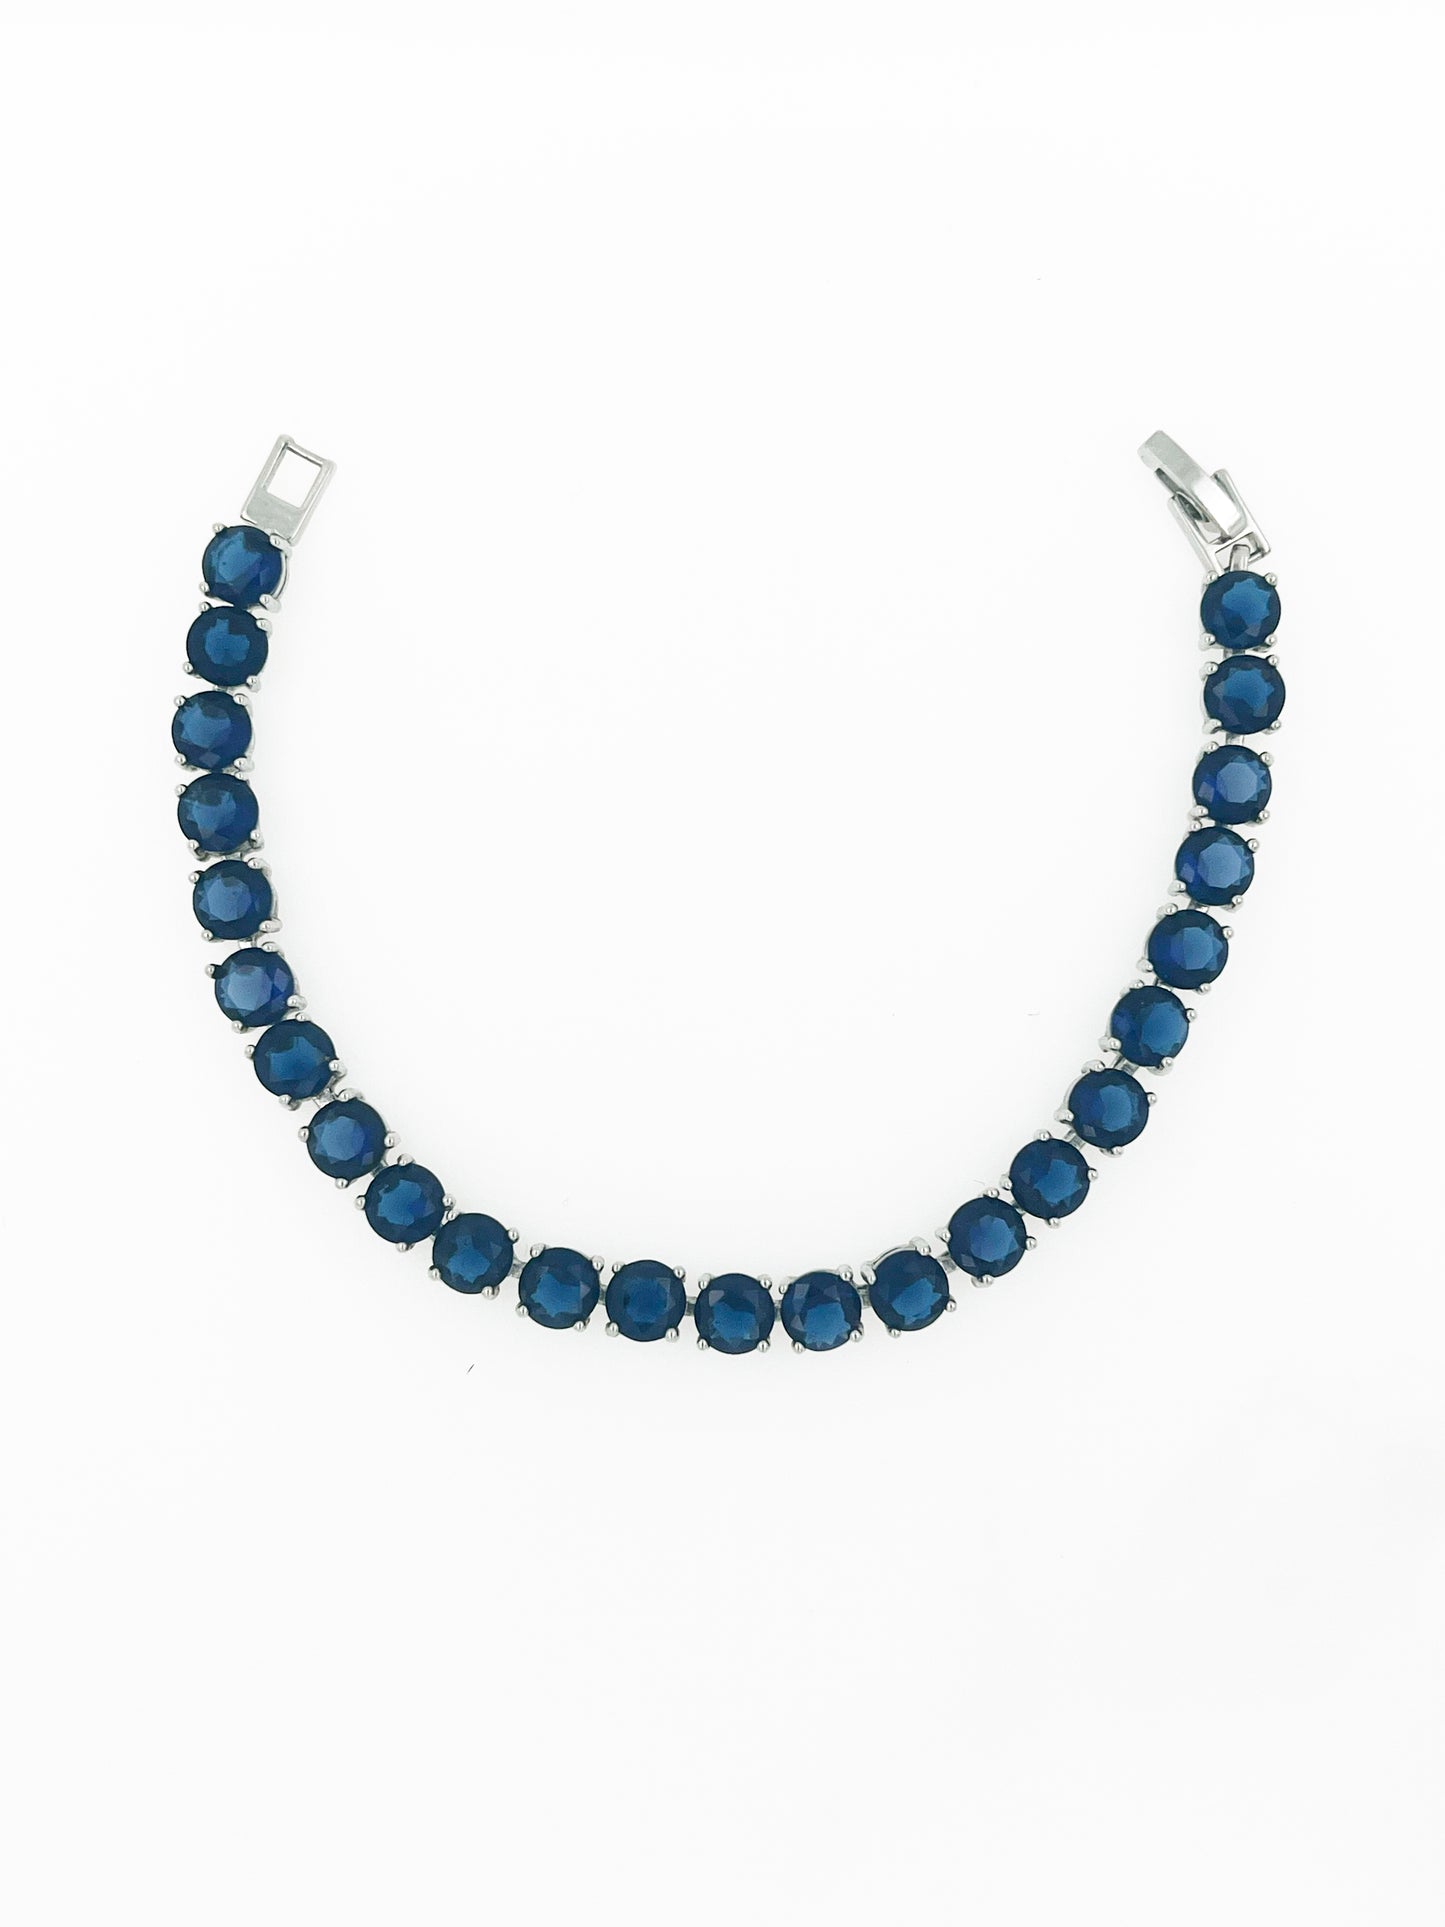 25 Carat Lab-Created Sapphire Tennis Bracelet in .925 Silver